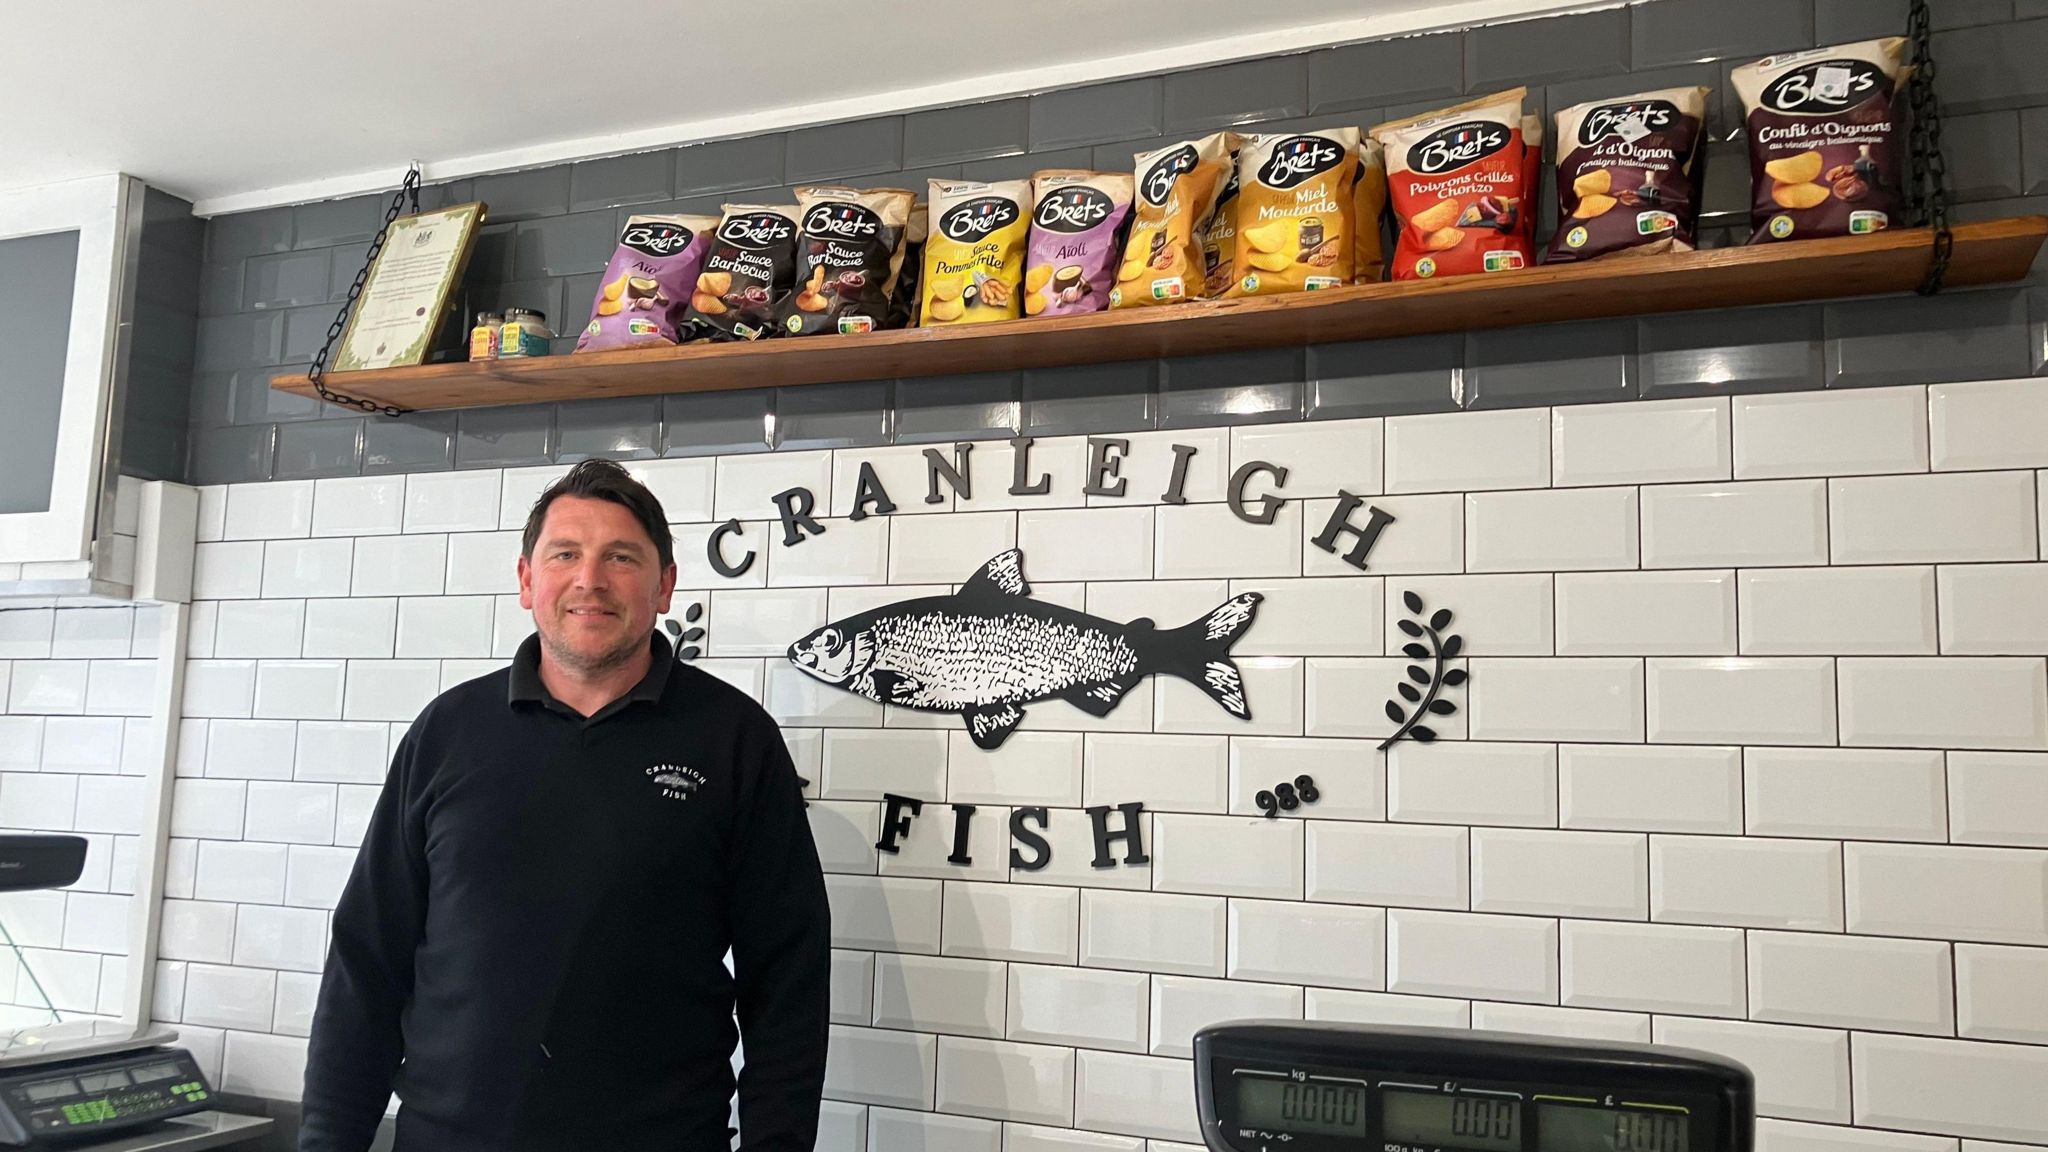 Fishmonger Steve Duffell inside Cranleigh Fish shop